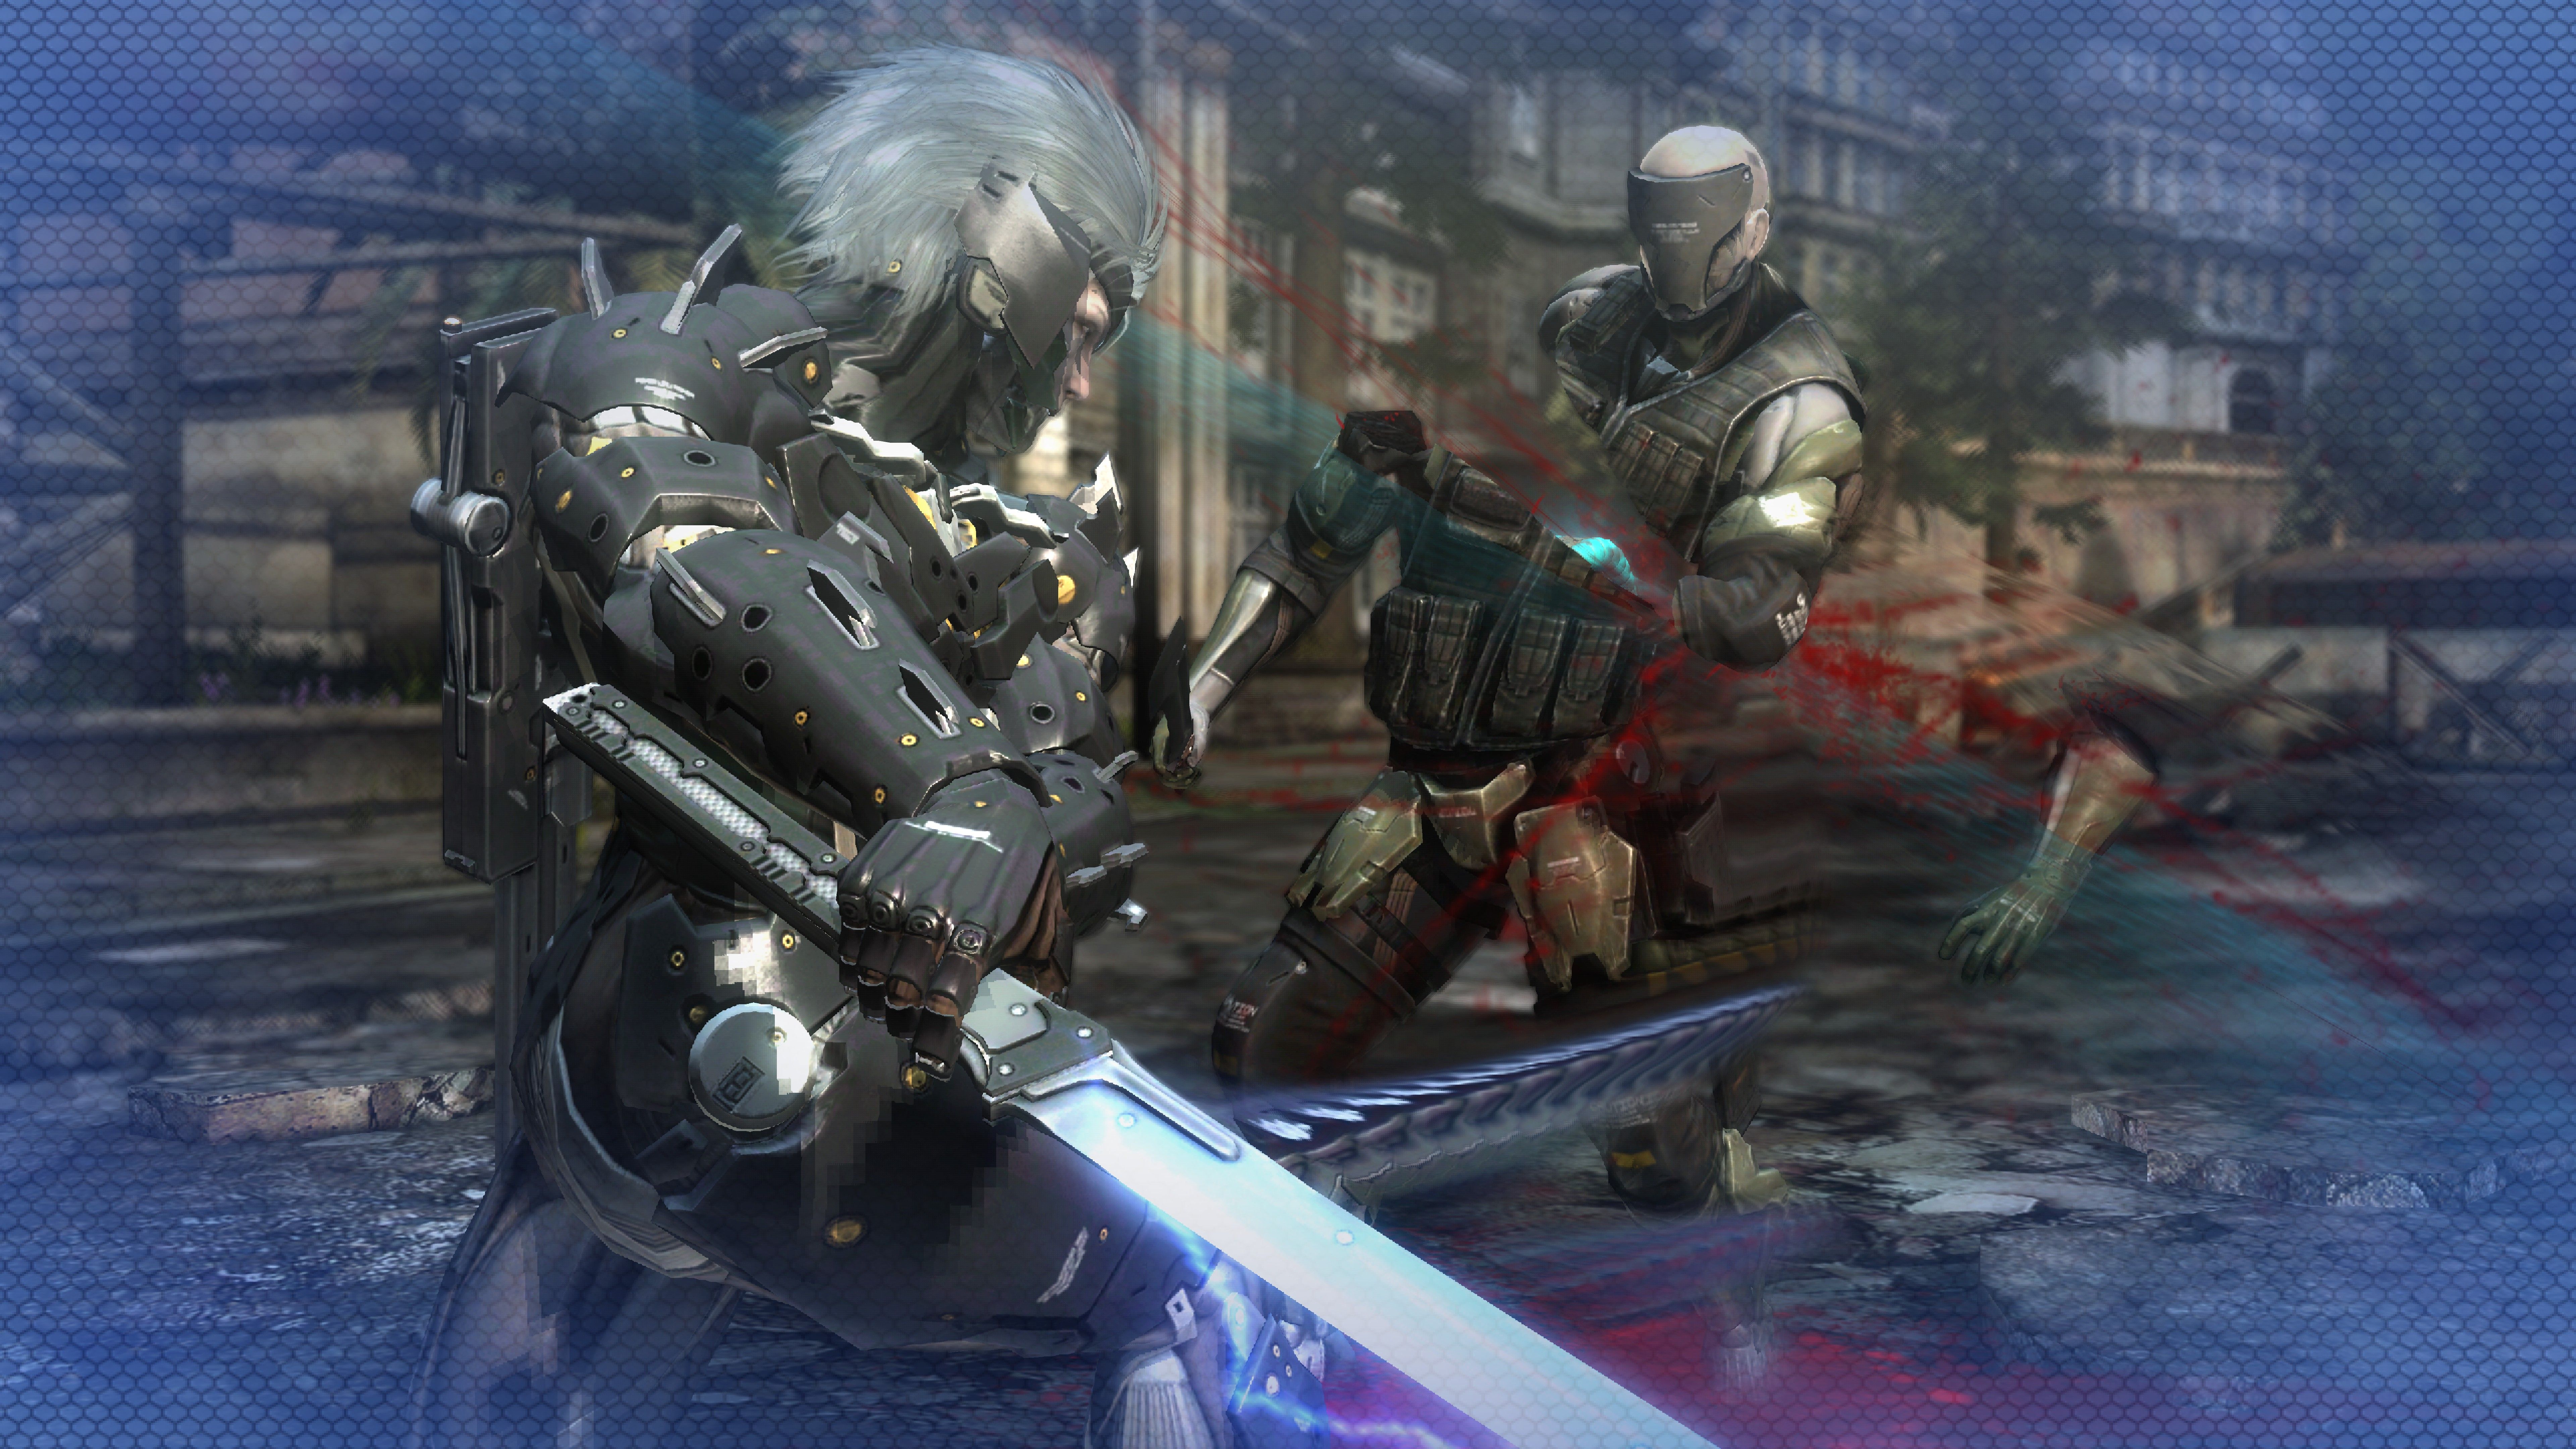 Metal Gear Rising: Revengeance demo arriving next week - Tapscape